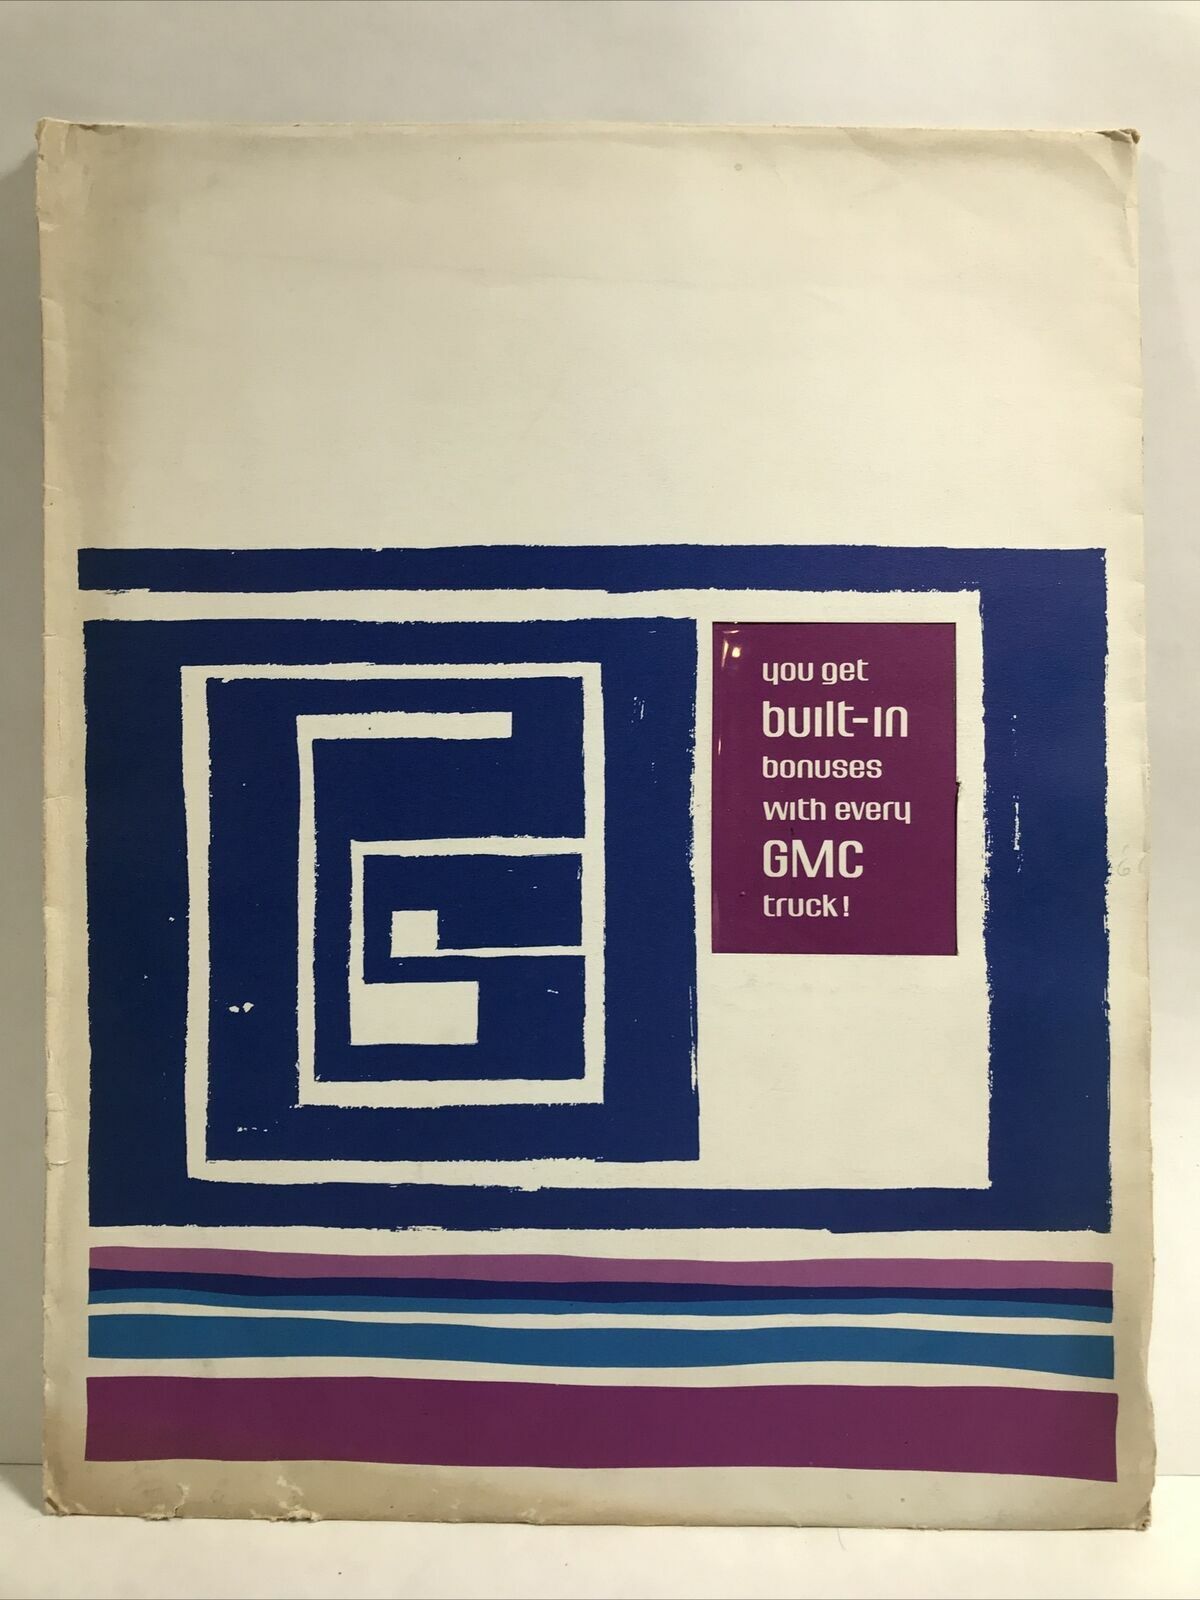 1962 GMC OCTOBER BUILT-IN BONUSES Sales Advertising Promotions Samples Folder